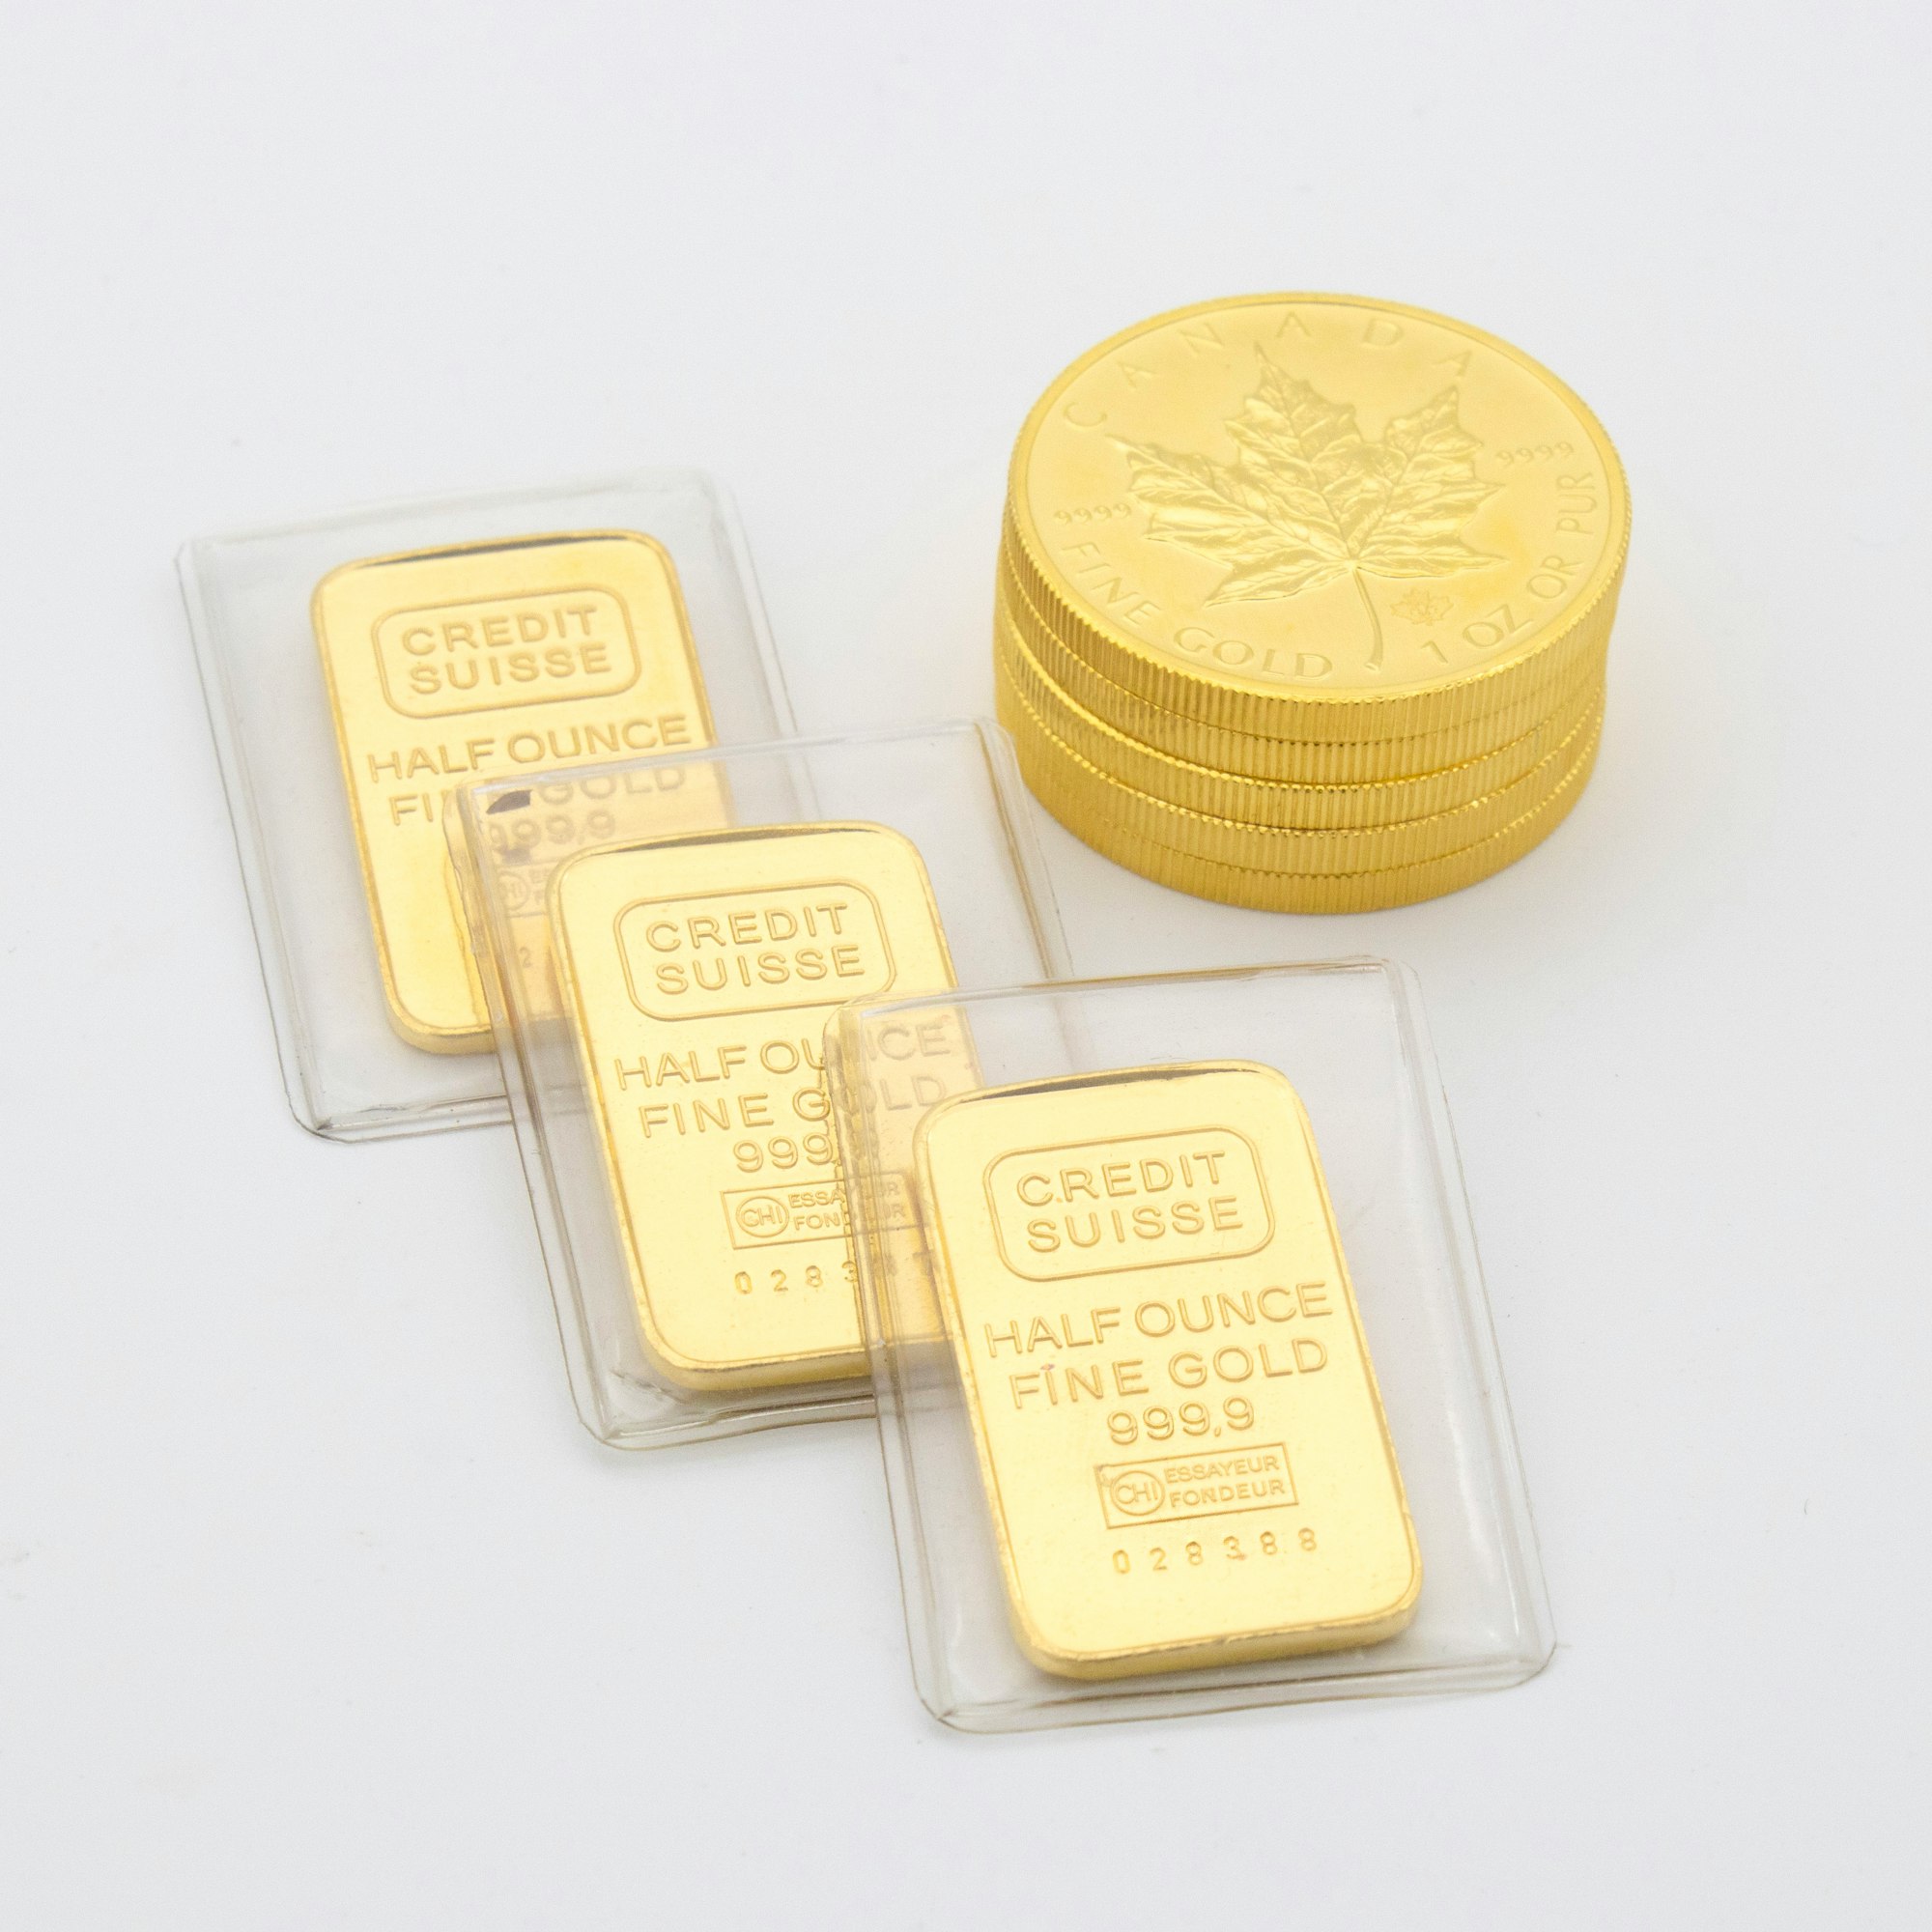 Gold coins and Bullion pure 24 karat gold
